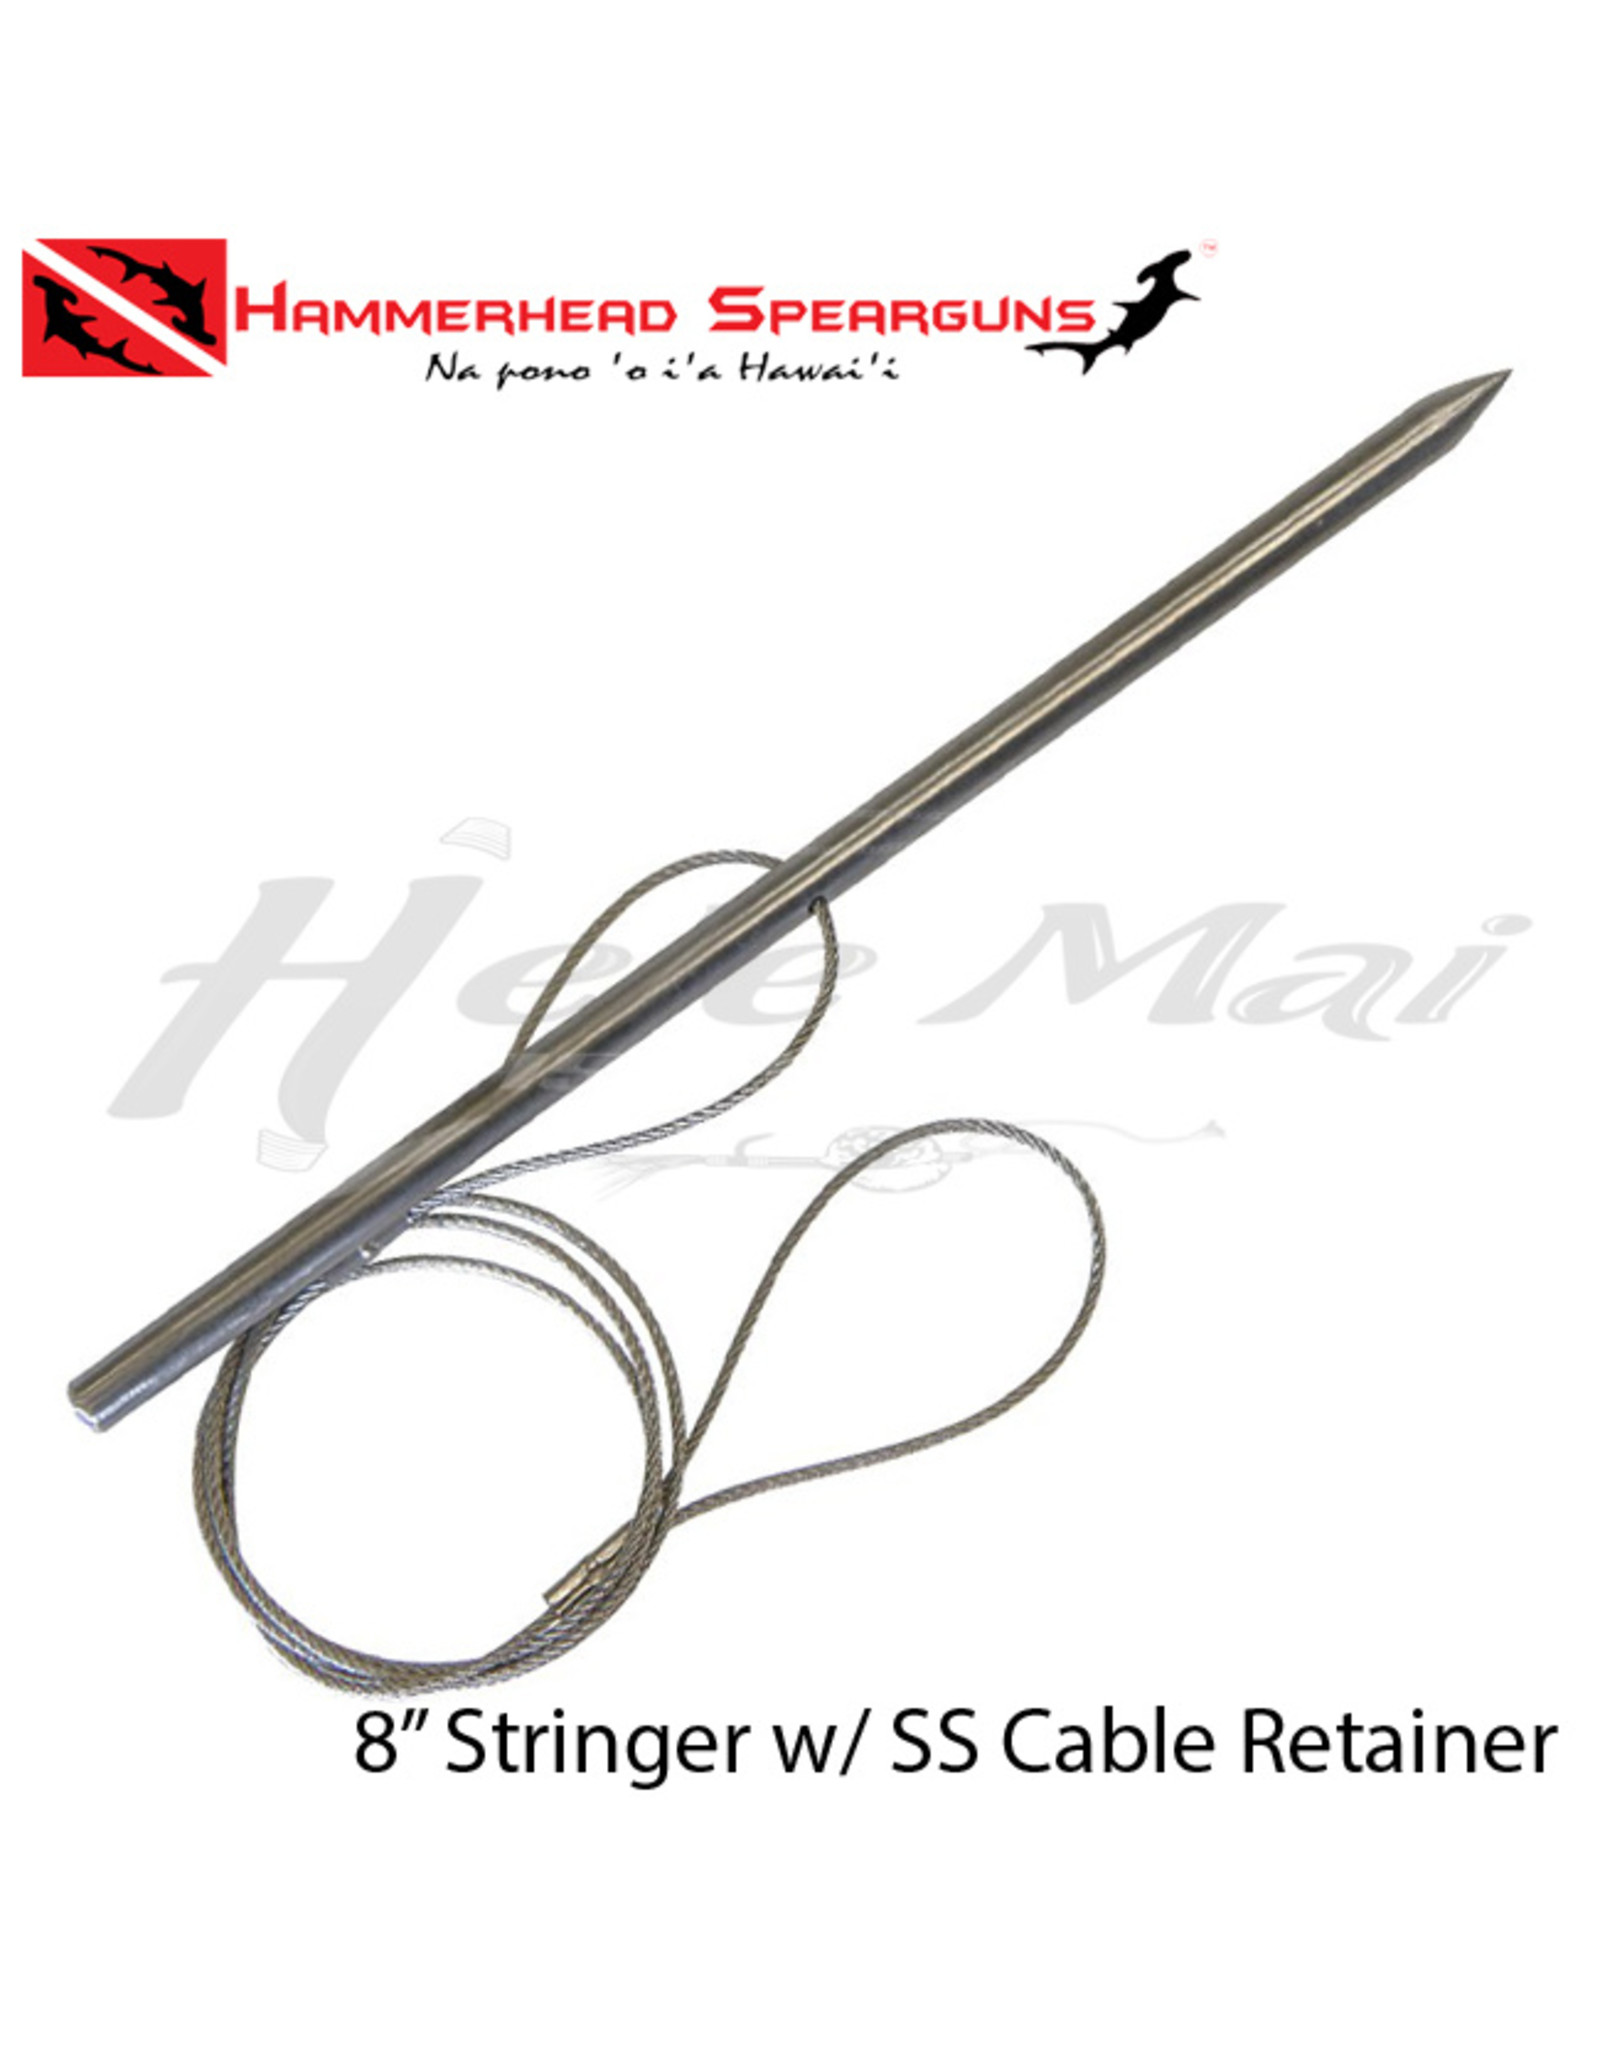 https://cdn.shoplightspeed.com/shops/641744/files/39317843/1600x2048x2/hammerhead-spearguns-hhs-hhs-cable-retainer-string.jpg